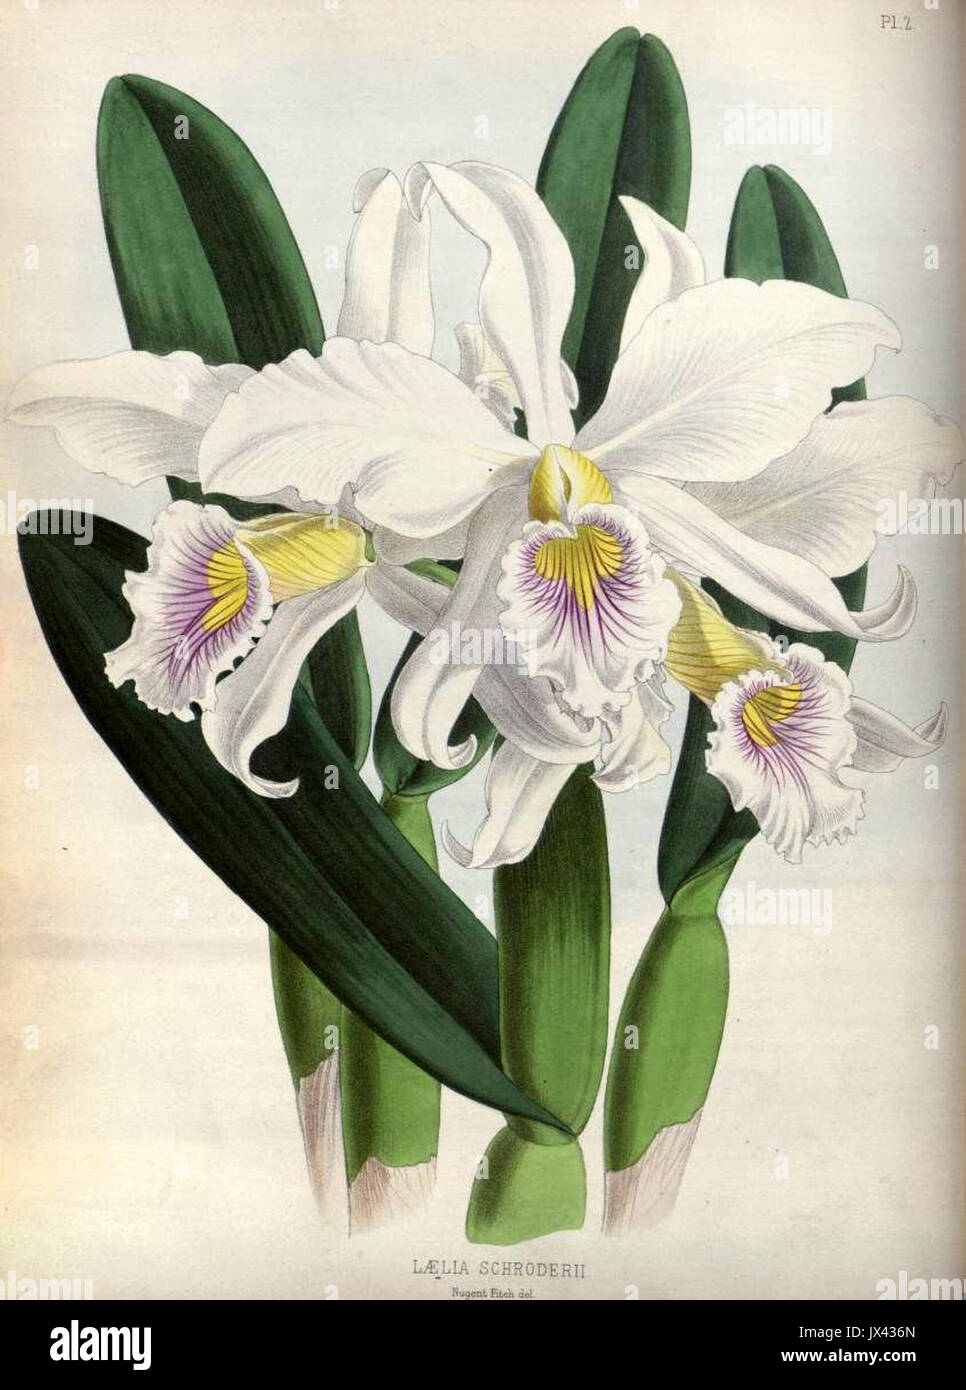 (The Orchid Album Plate 002) Laelia schroderii Stock Photo